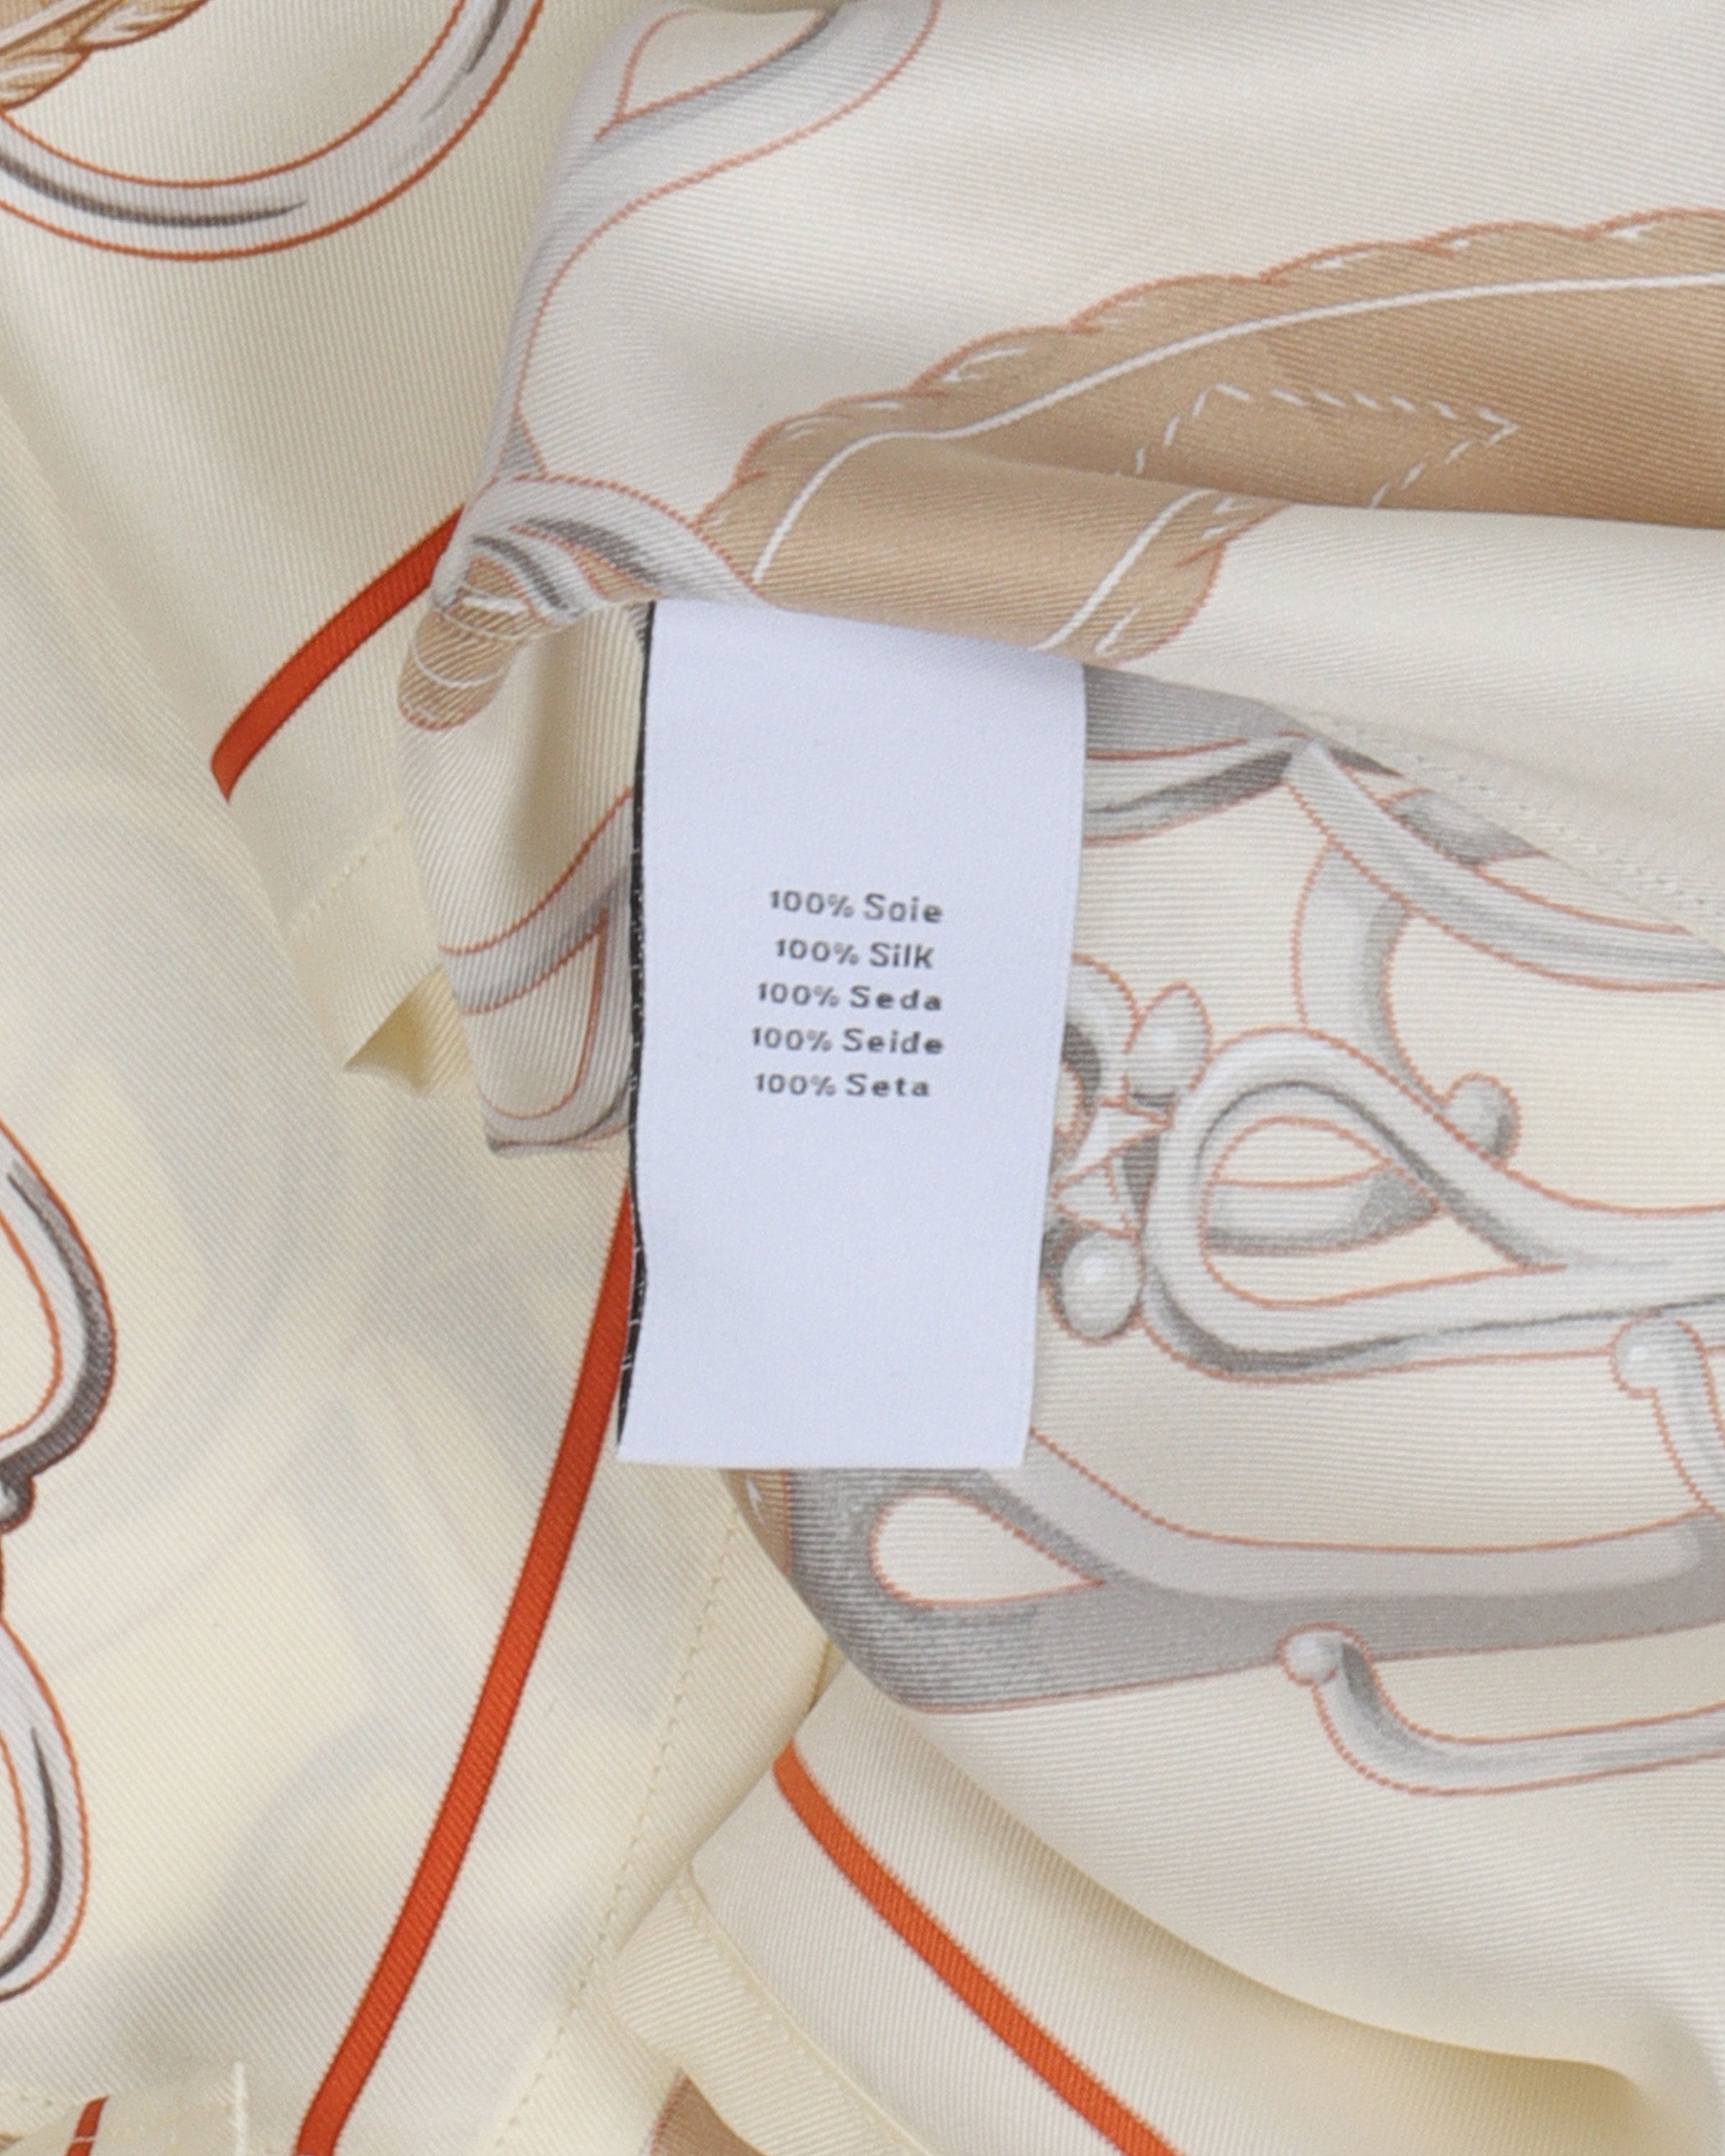 Uniqlo Silk Dress Shirt, Hermes Sous le Cedre scarf, Hermes Kelly